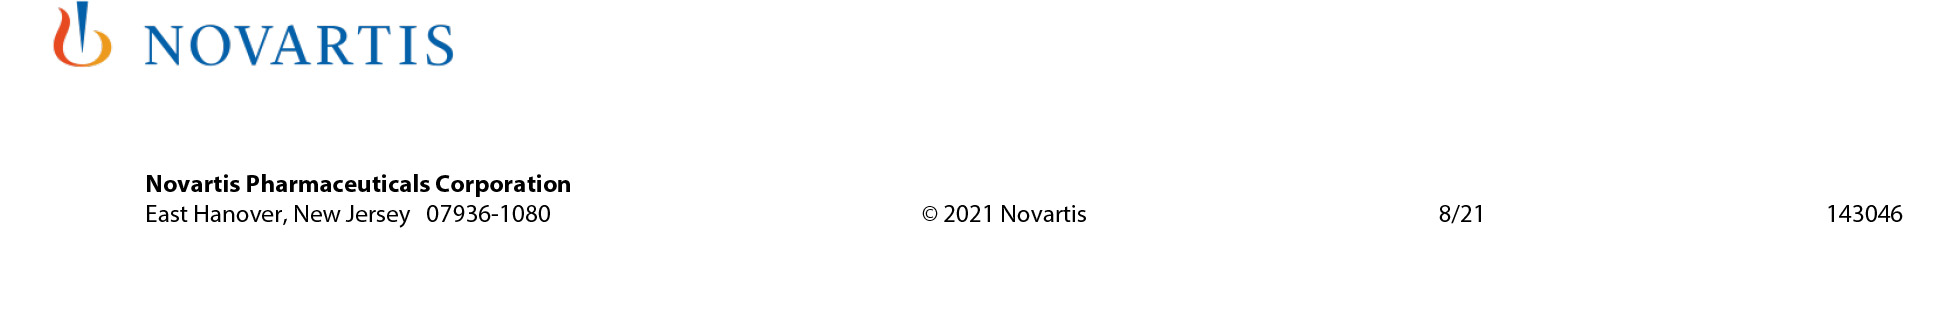 Novartis Footer 8/21